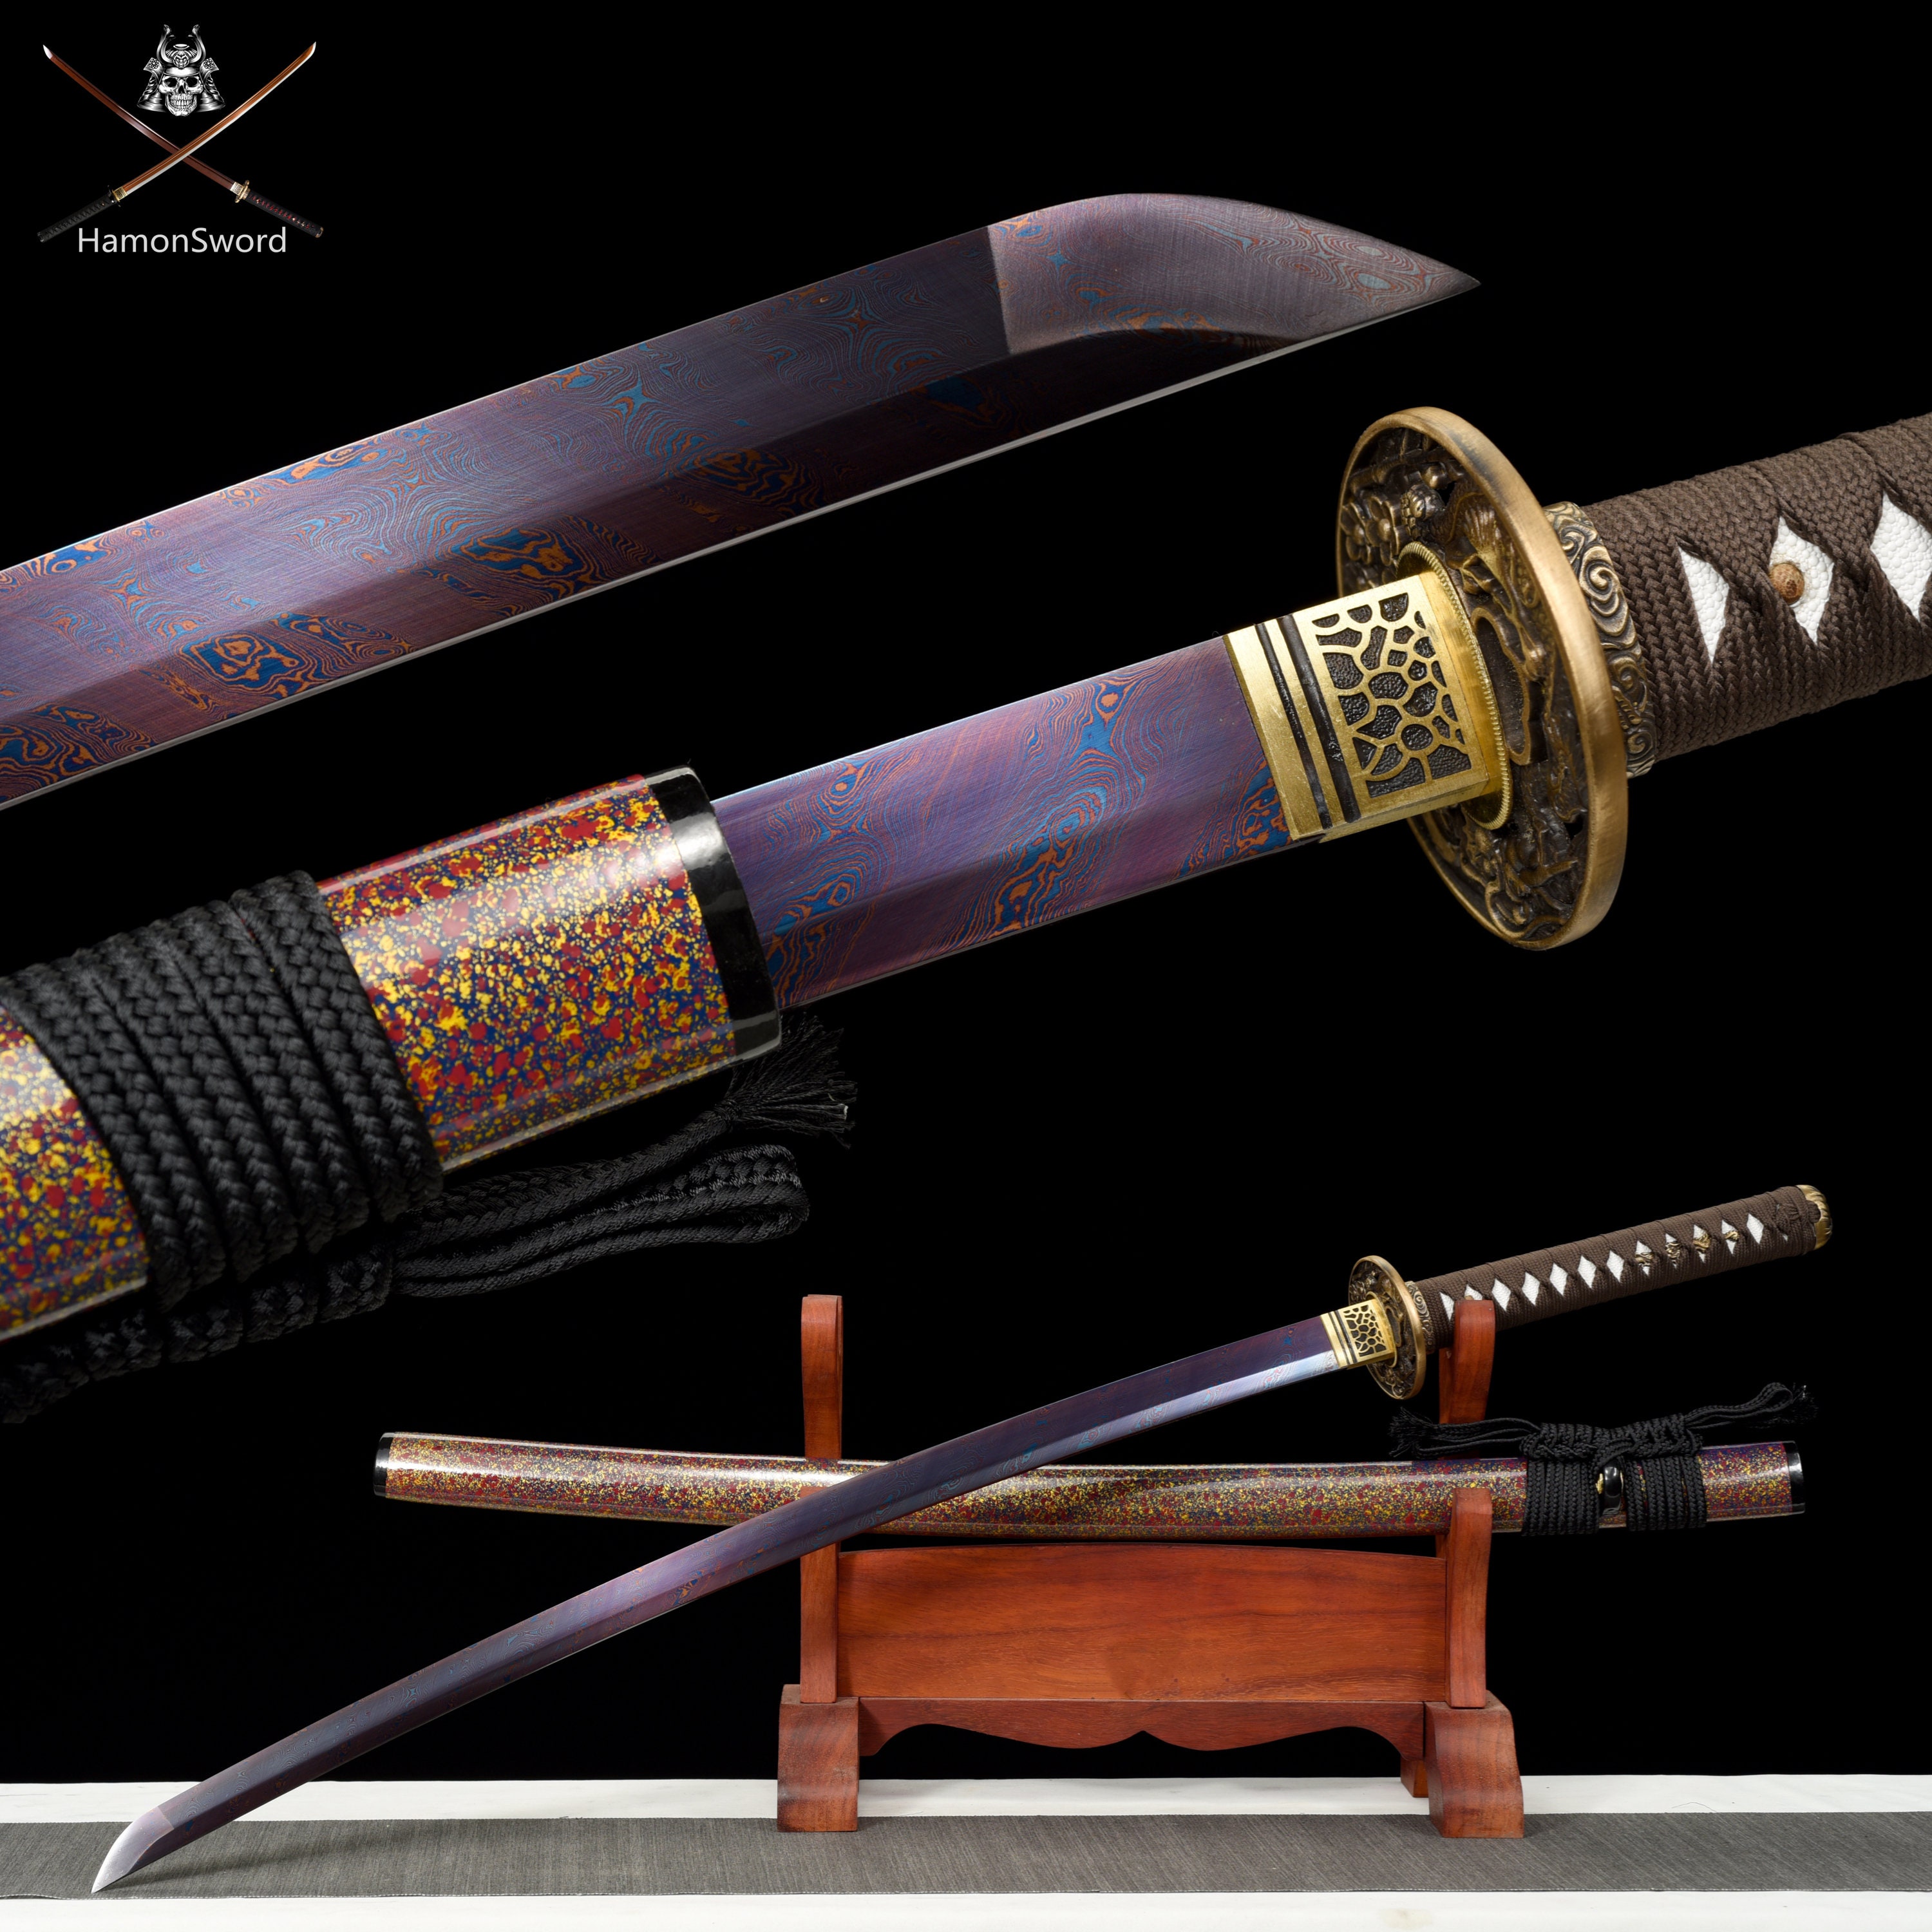 Terraria Muramasa Sword Design Laptop Skin for Sale by BobertRobertArt